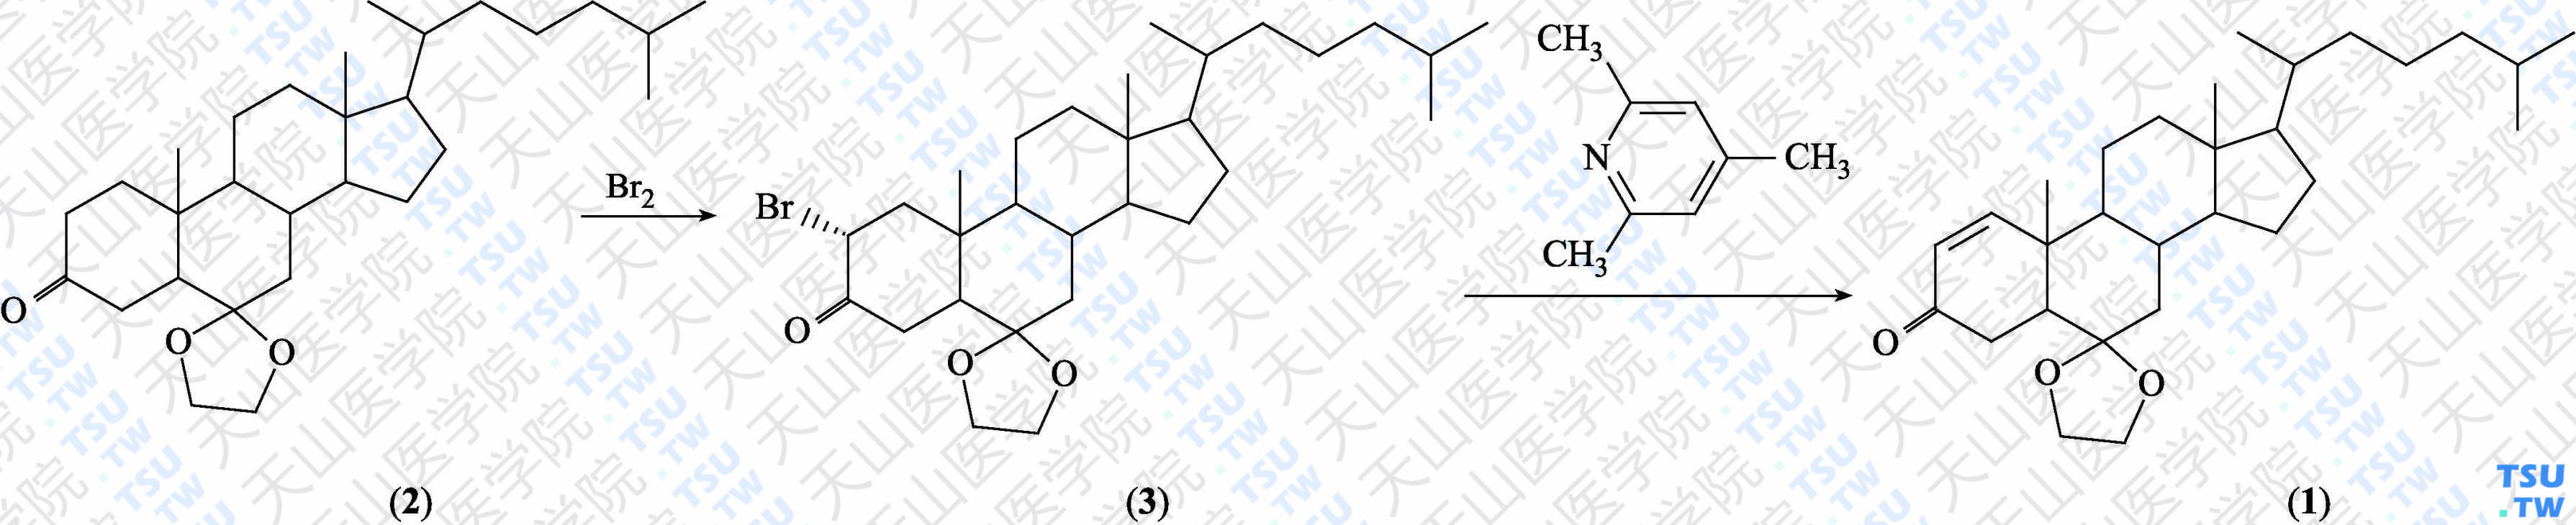 6，6-亚乙二氧基-胆甾-1-烯-3-酮（分子式：C<sub>29</sub>H<sub>46</sub>O<sub>3</sub>）的合成方法路线及其结构式